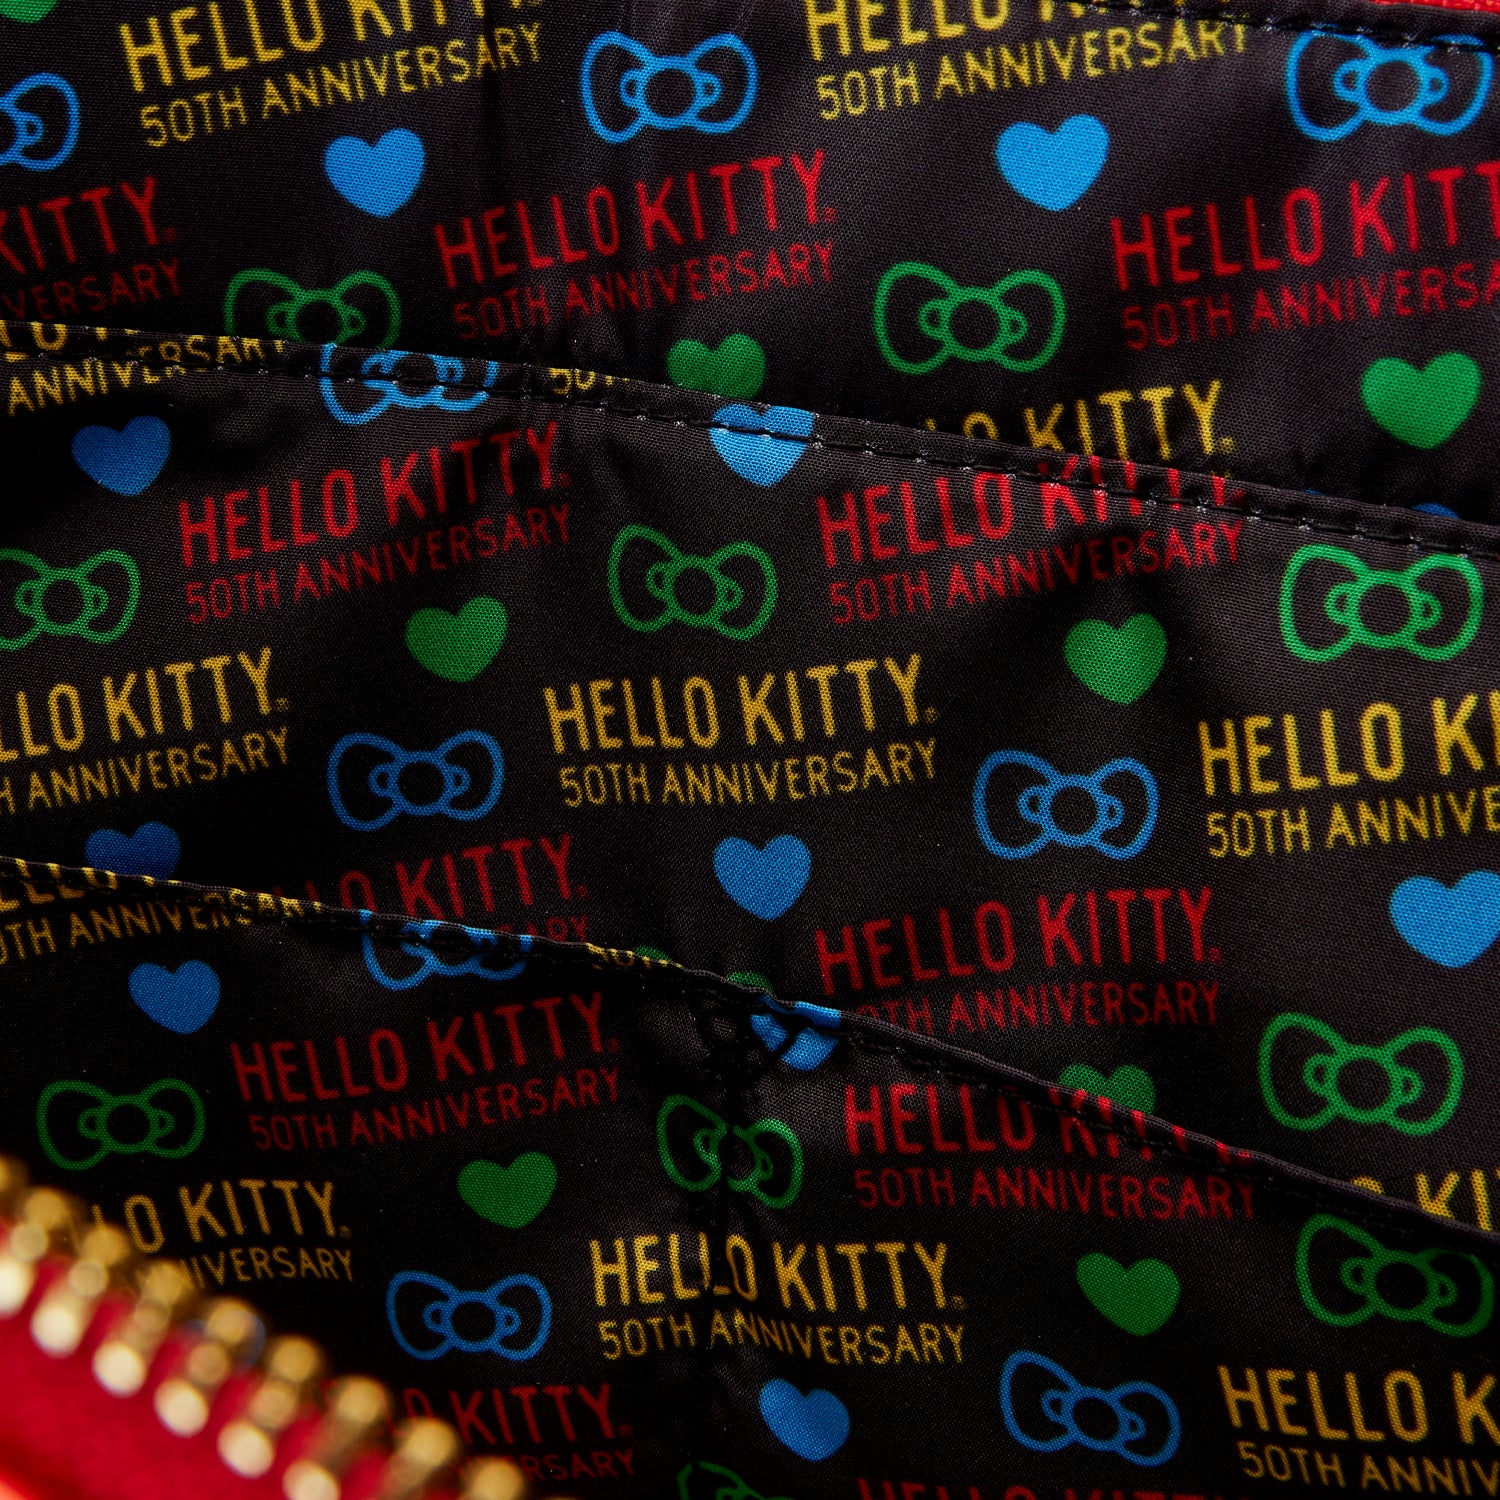 Loungefly x Sanrio Hello Kitty 50th Anniversary Metallic Tote Bag